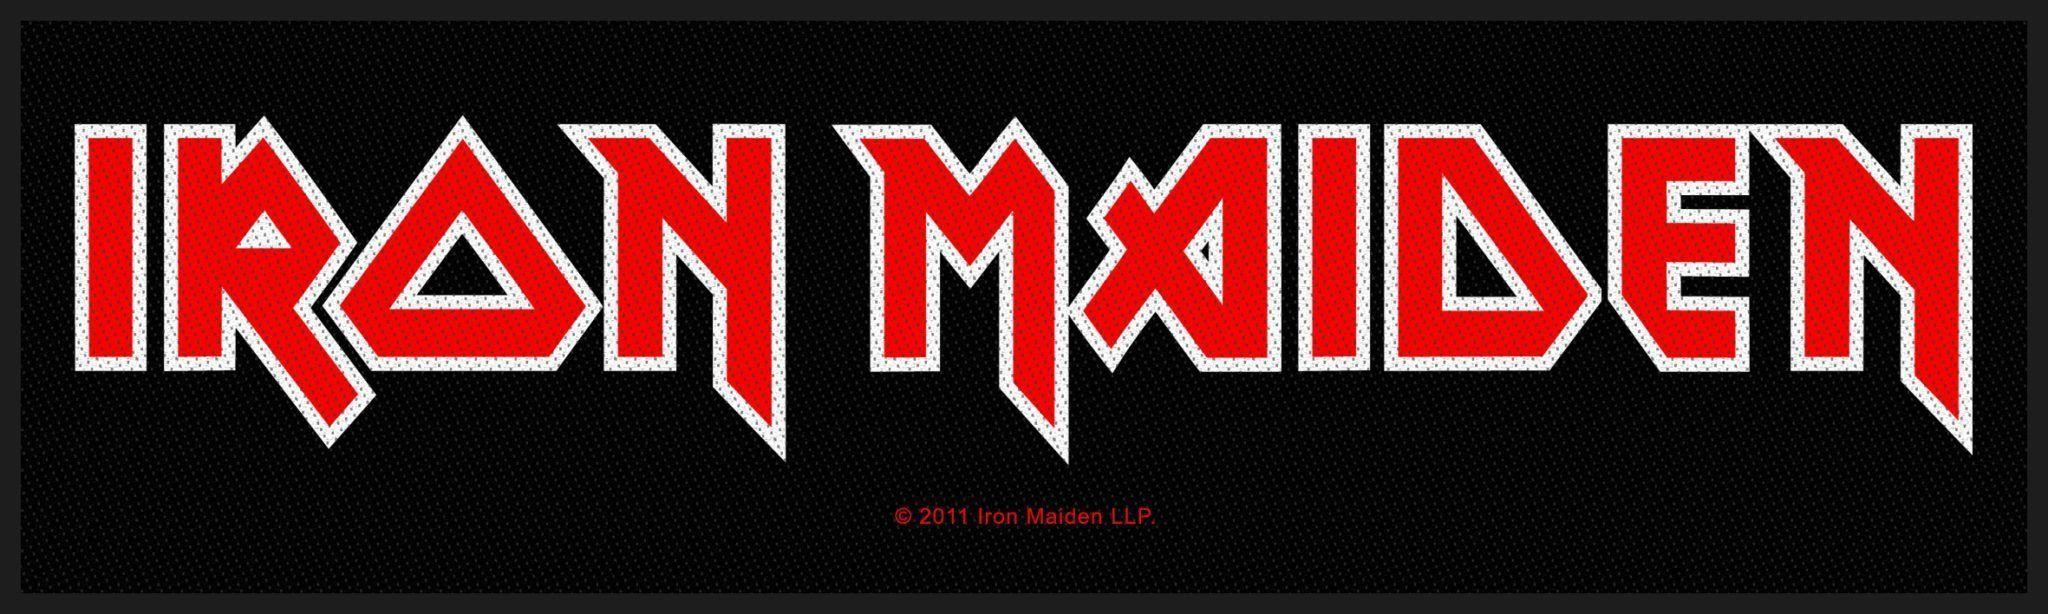 Iron Maiden Logo - Iron Maiden Woven Superstrip Logo